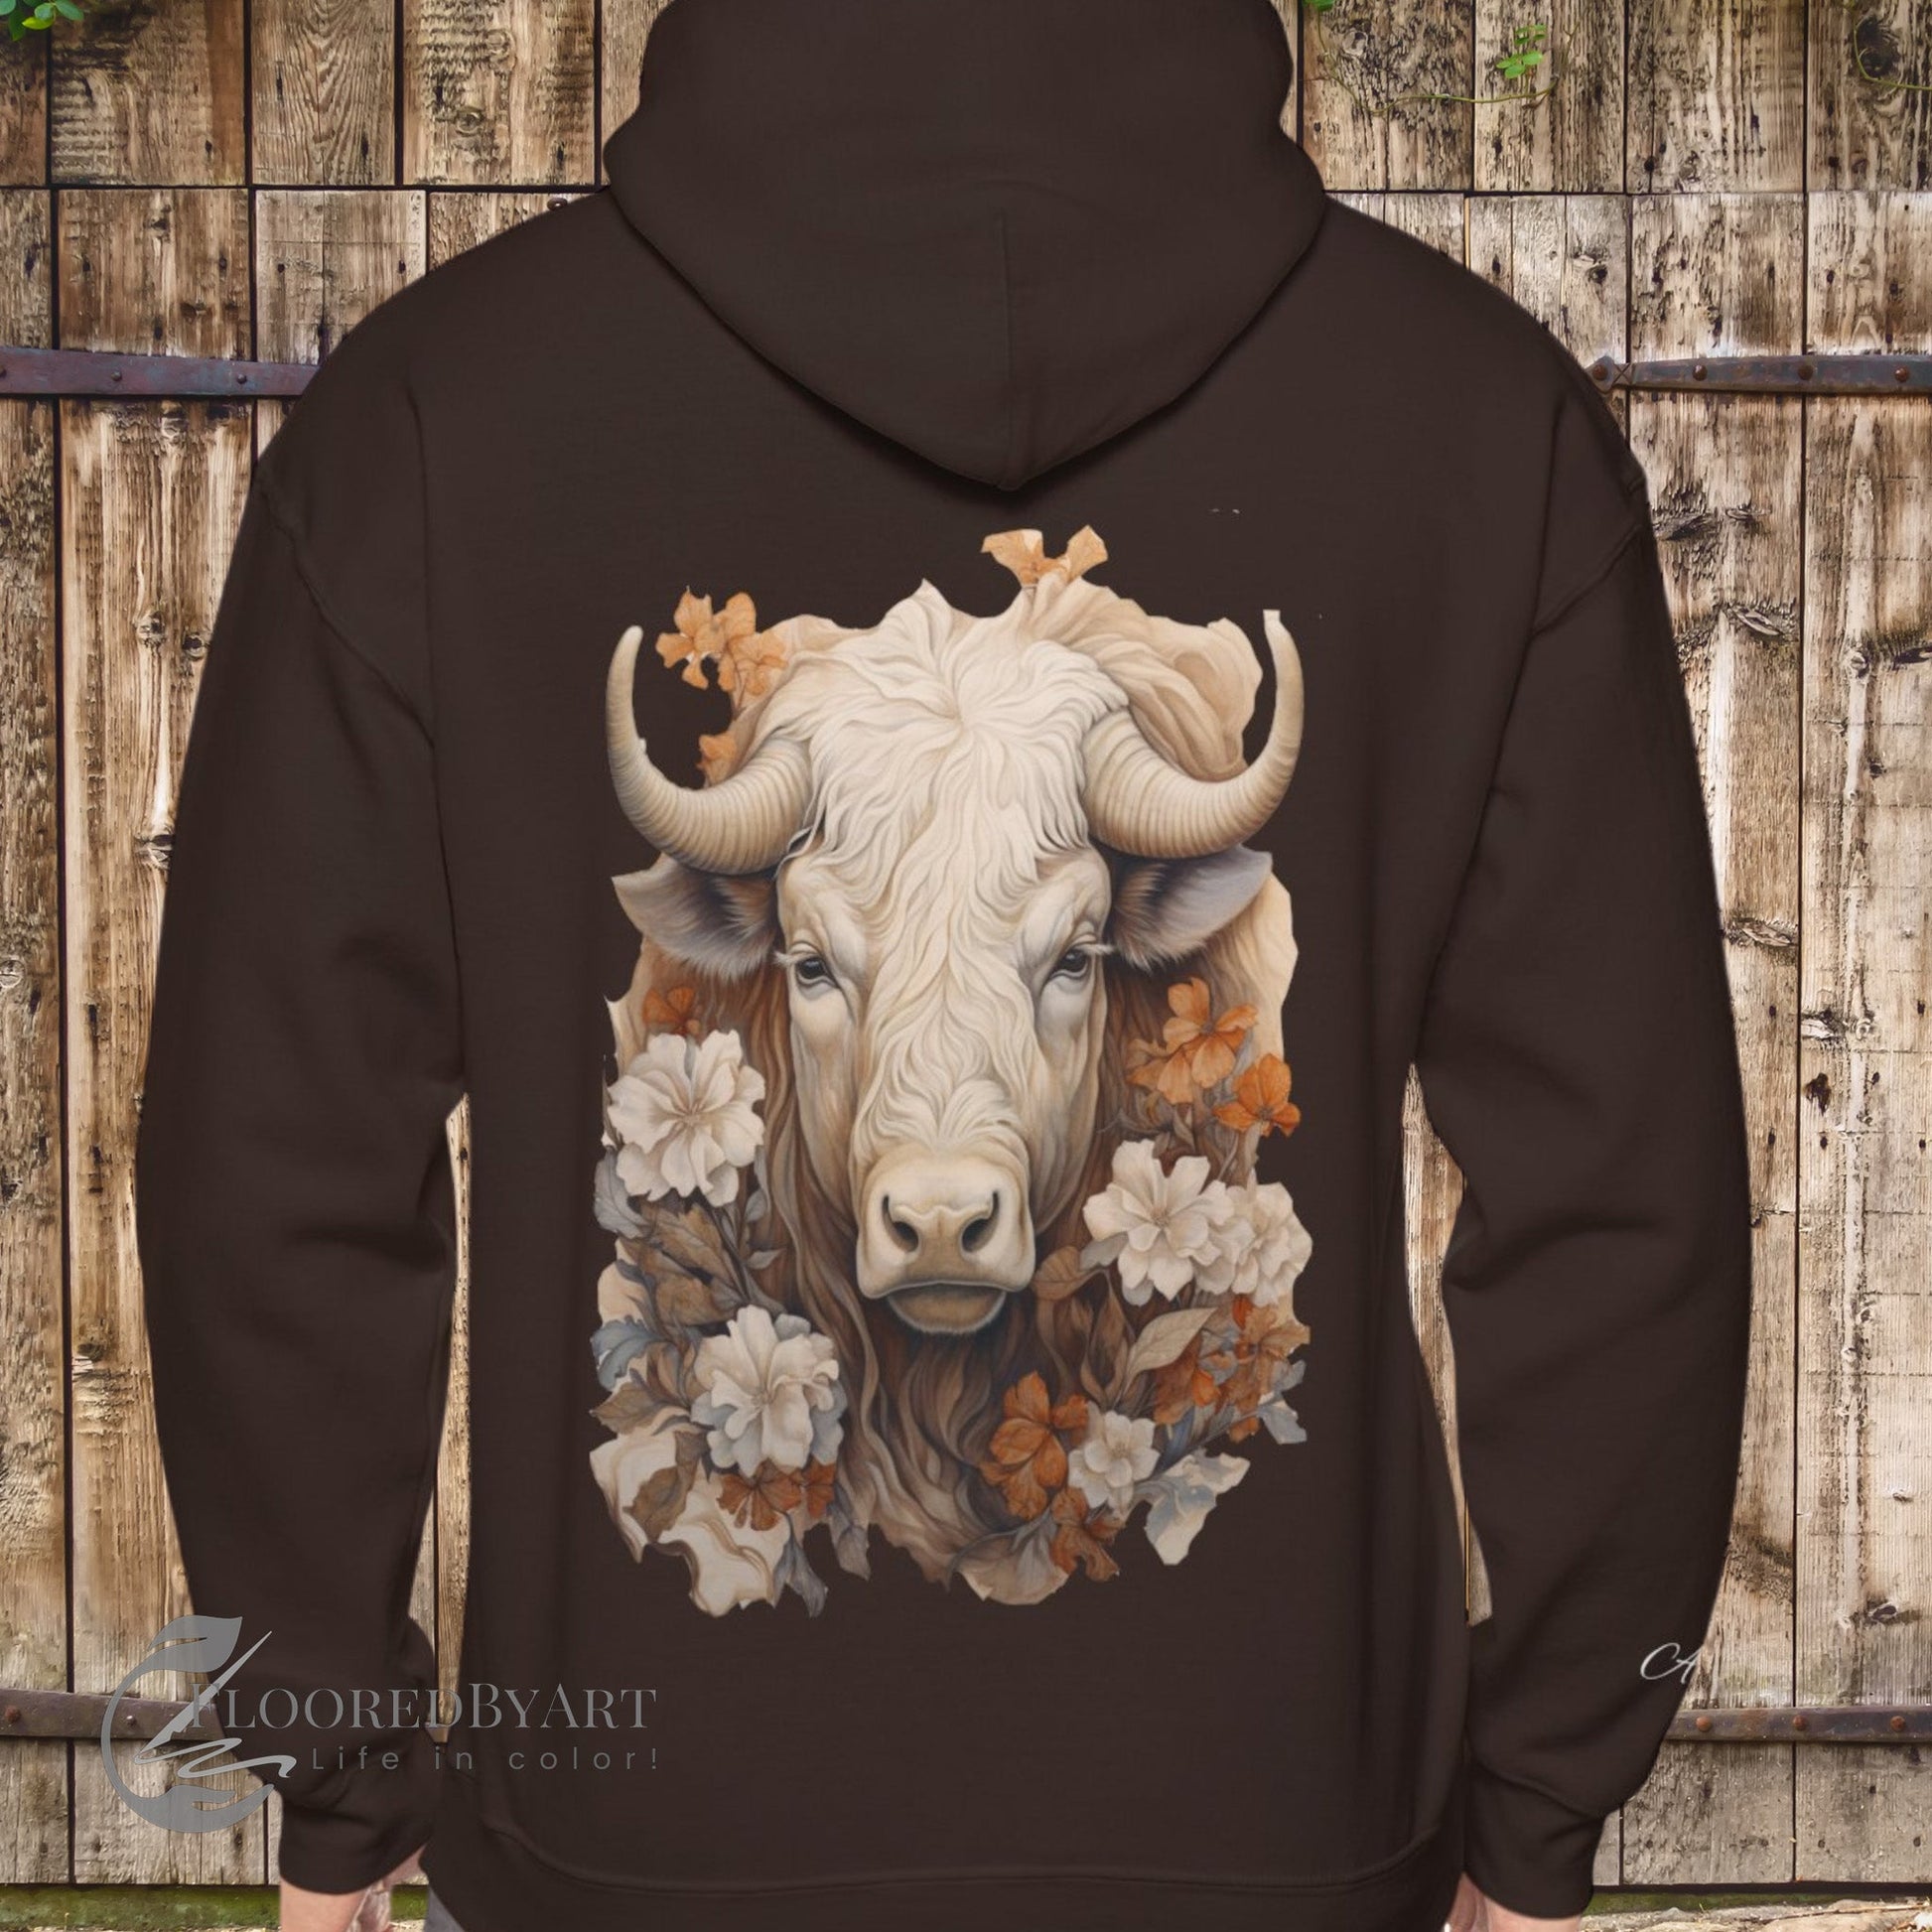 Cow Shirt - Hooded Sweatshirt Design, Cow & Flowers Shirt, Cowgirl Fashion - FlooredByArt